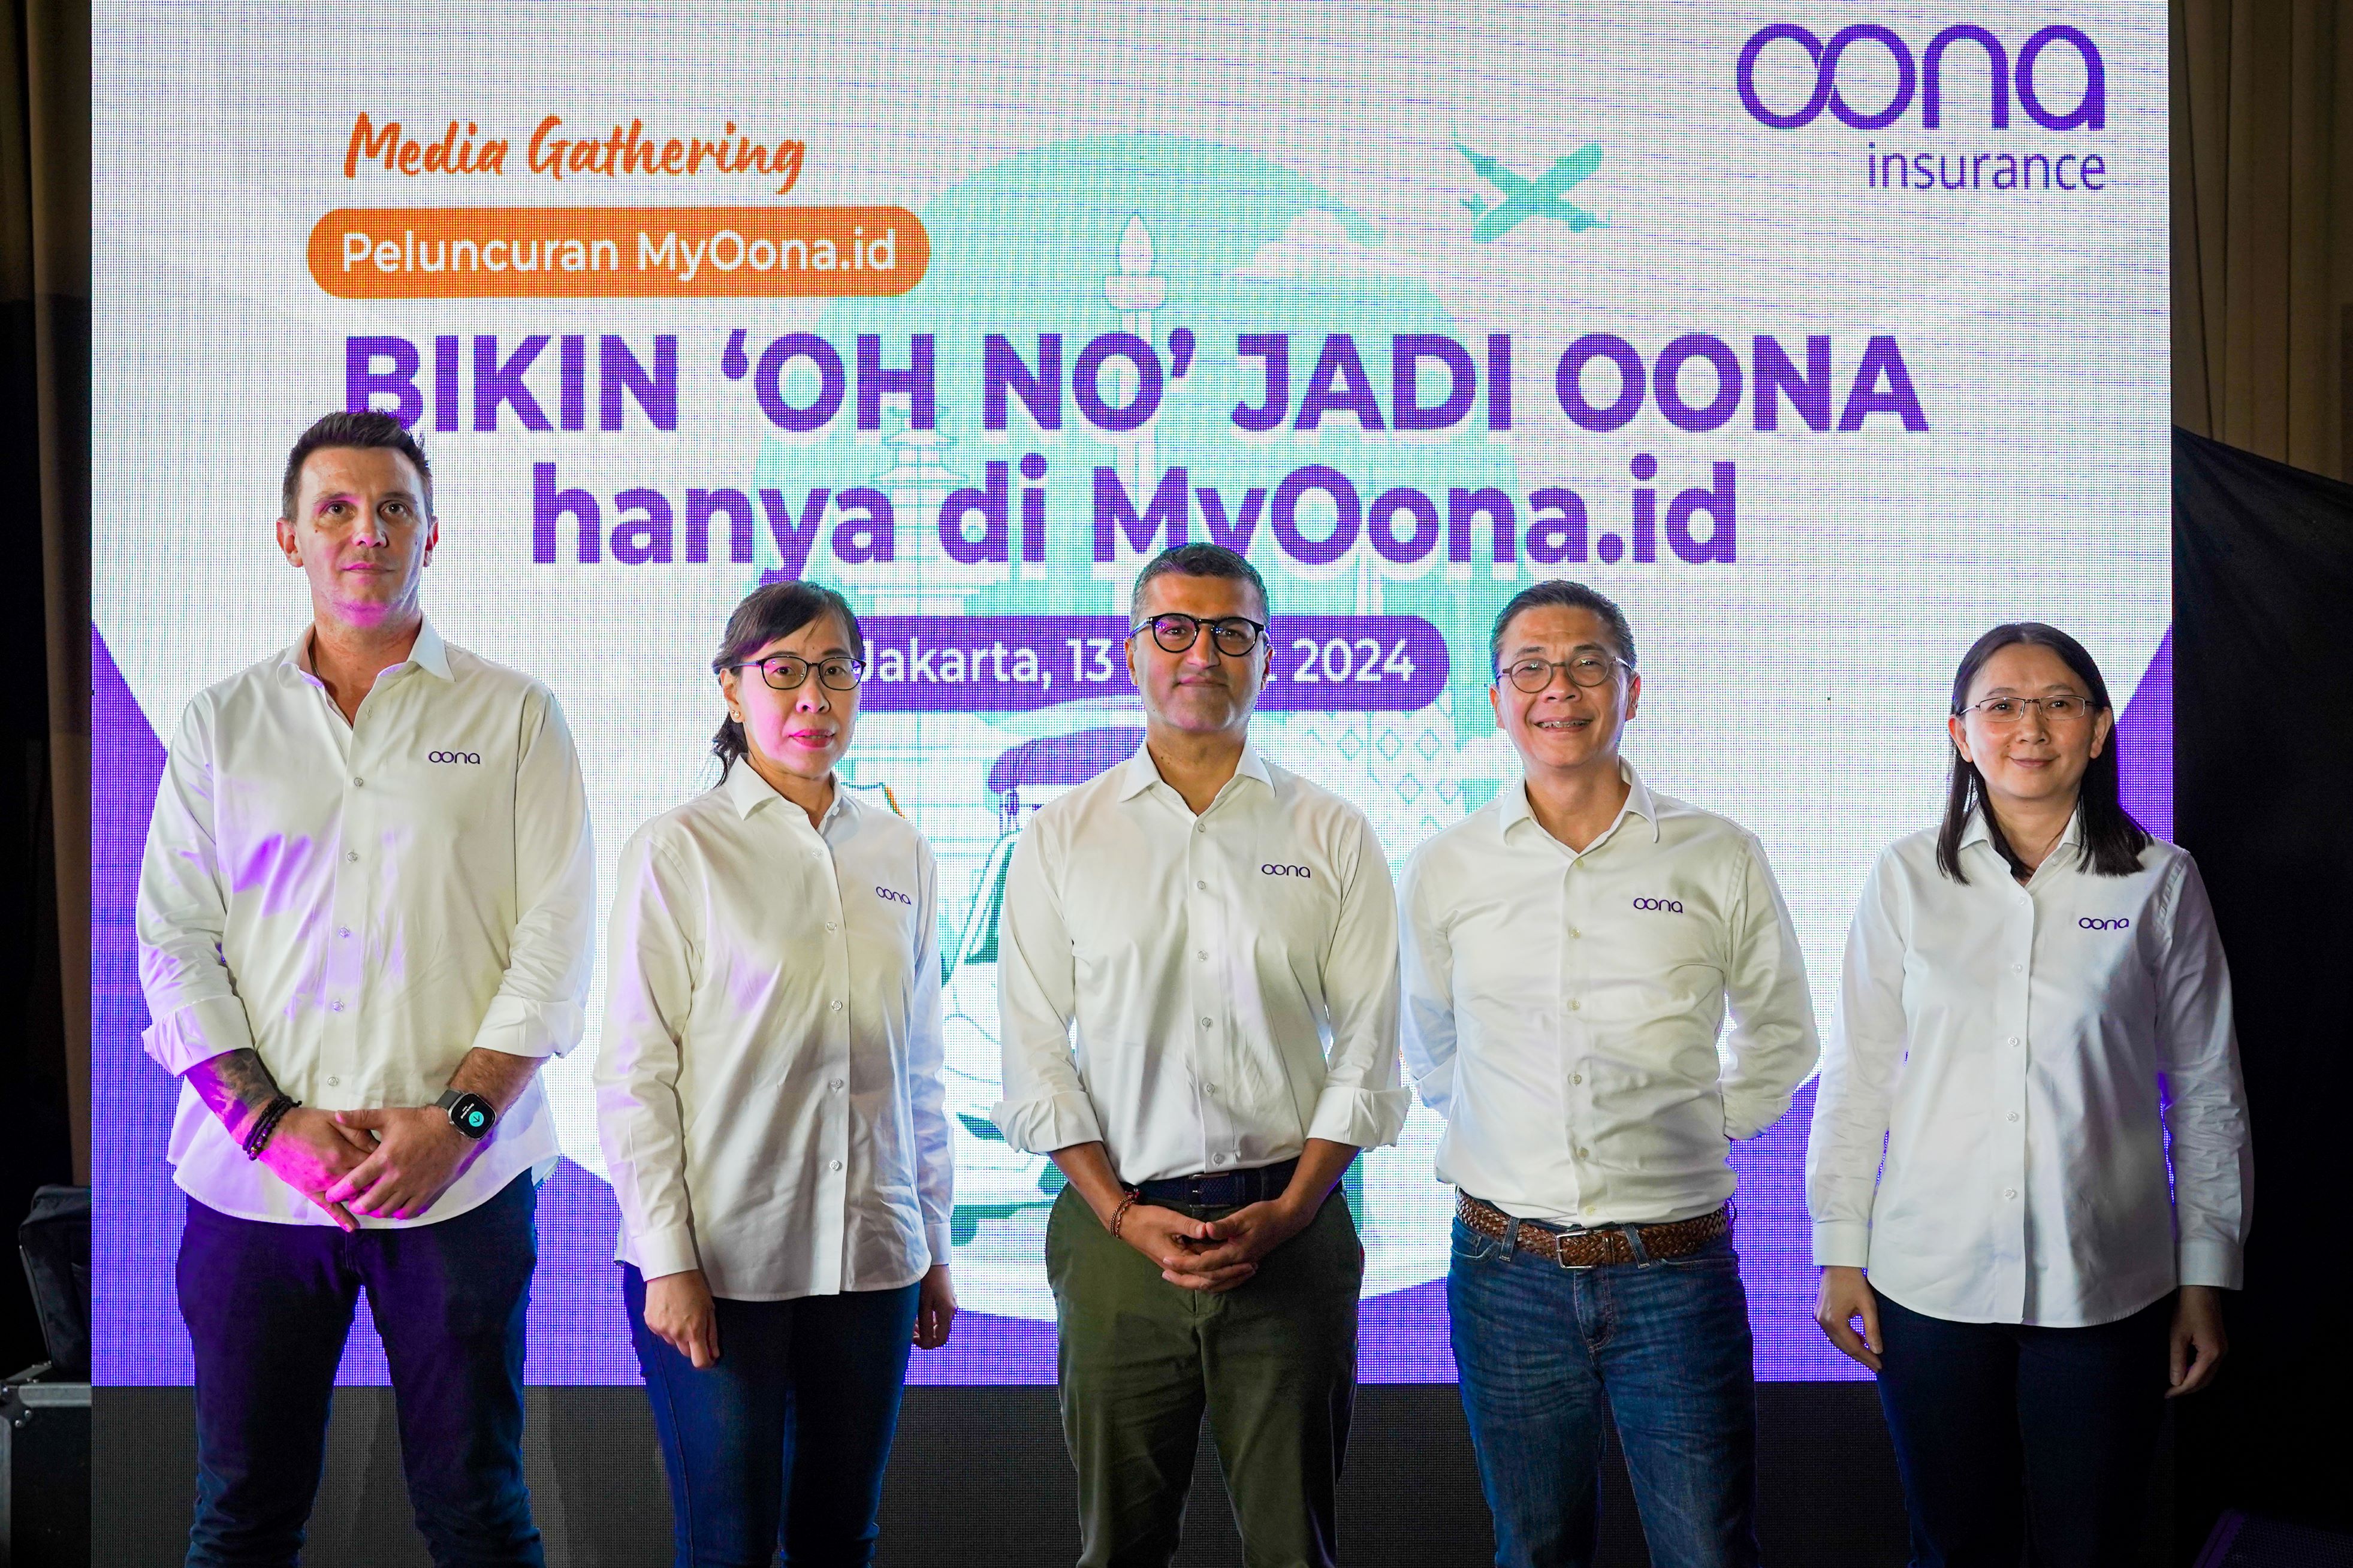 Oona Insurance Management Team